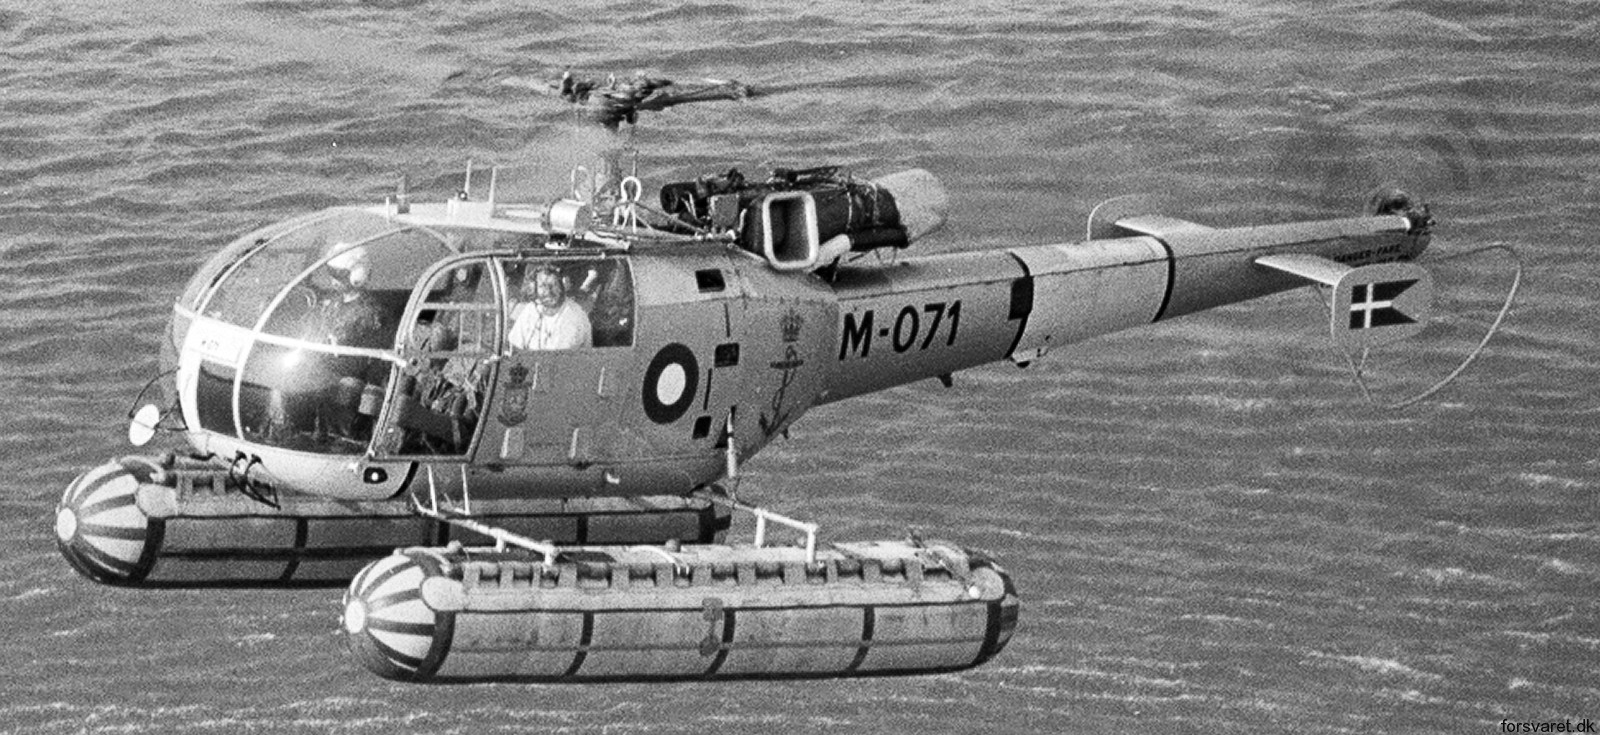 sa 316b alouette iii helicopter royal danish navy søværnet kongelige danske marine sud aviation m-071 09